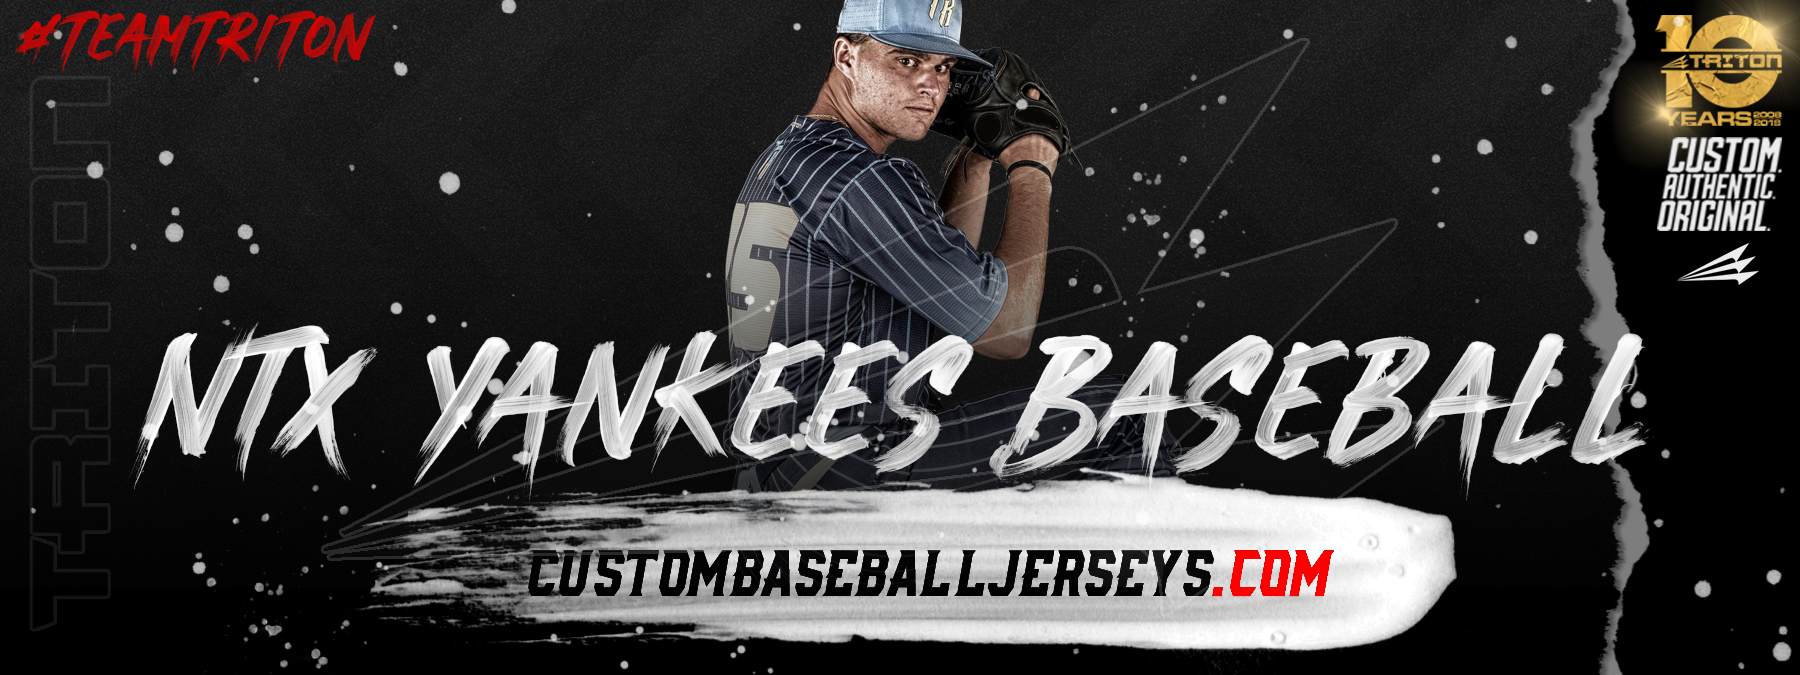 NTX Yankees Custom Baseball Jerseys